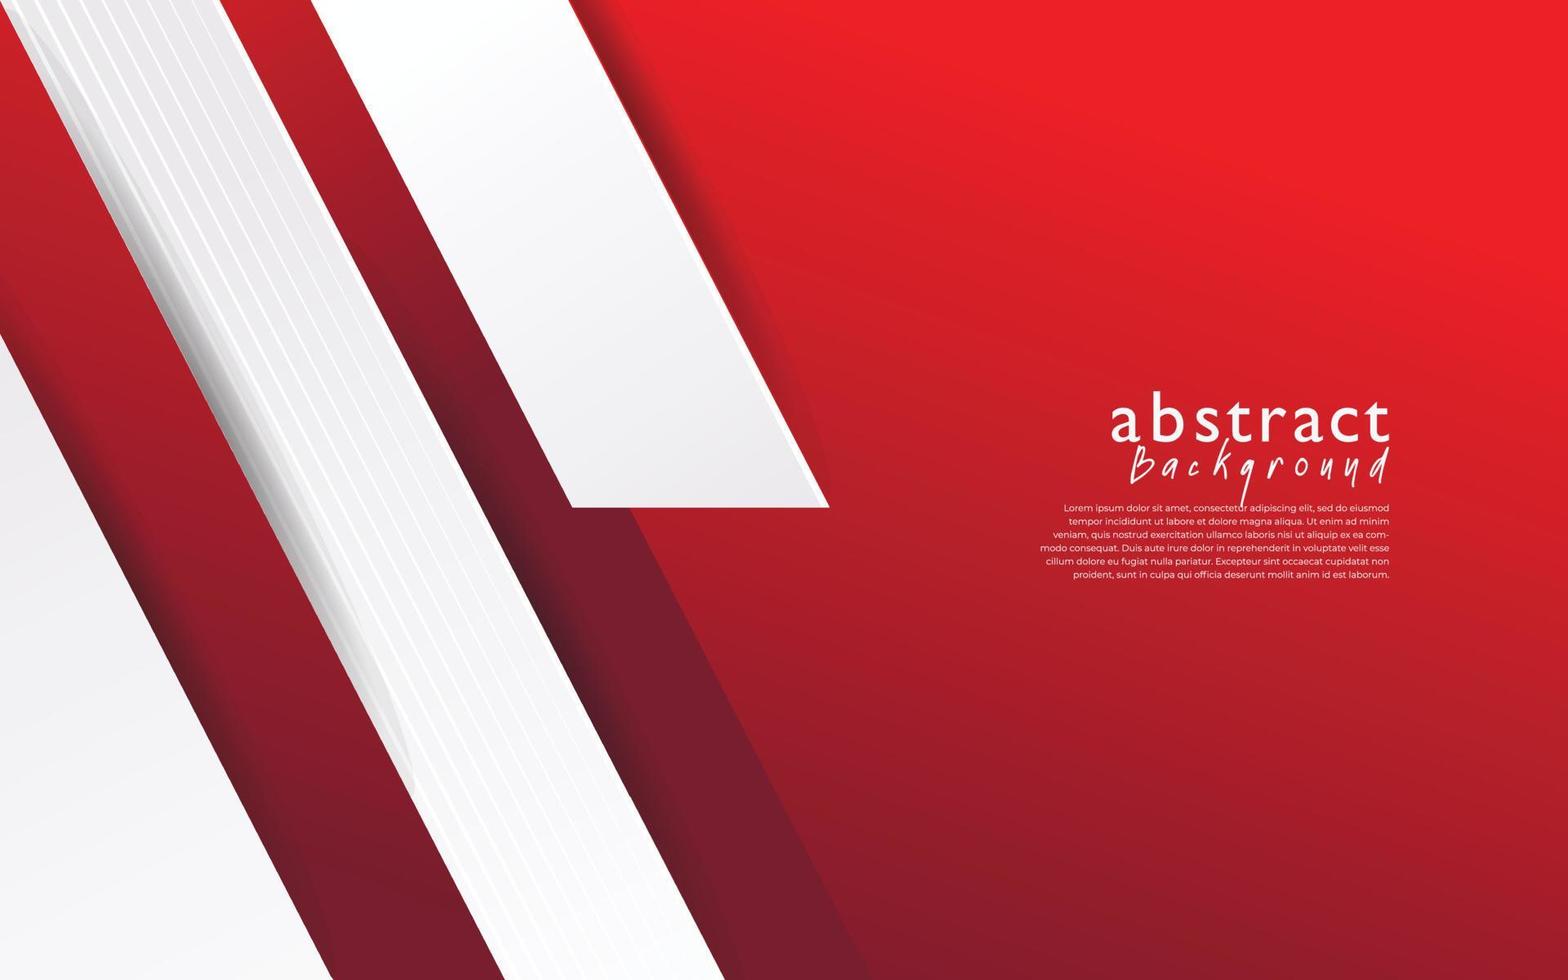 rood wit modern abstract ontwerp als achtergrond vector